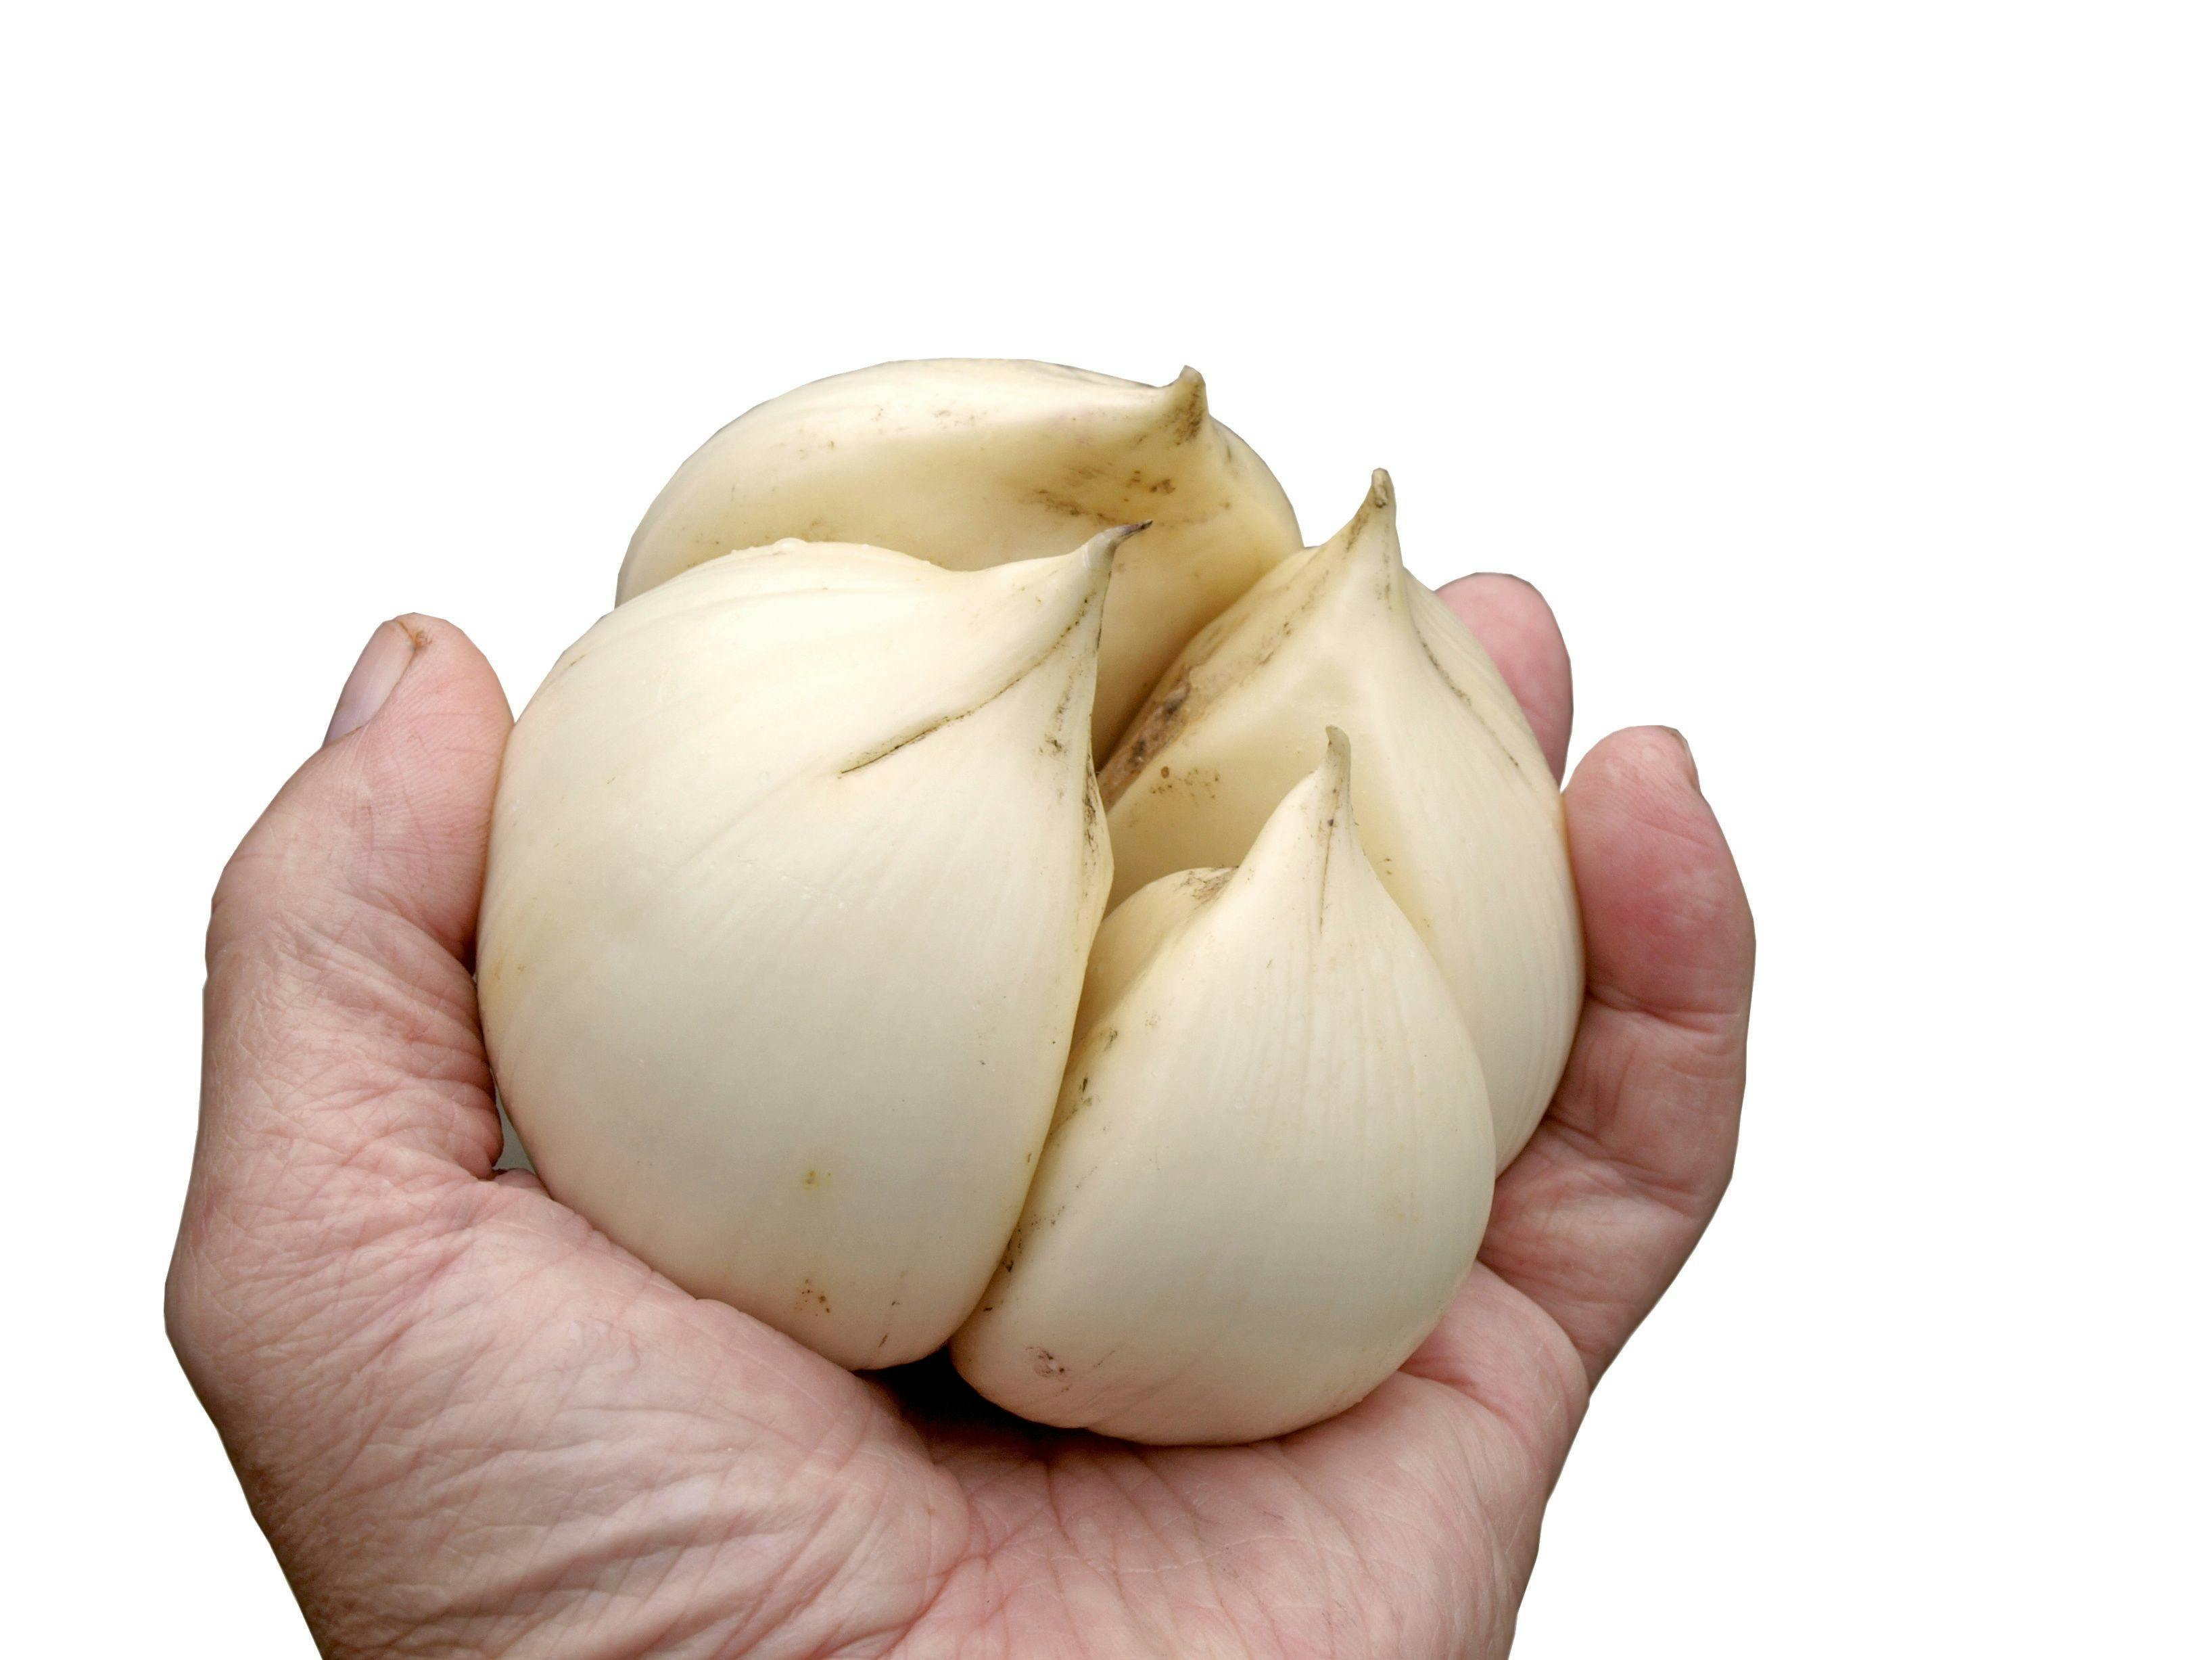 Giant garlic | Image Credit: © Viesturs Kalvans - stock.adobe.com